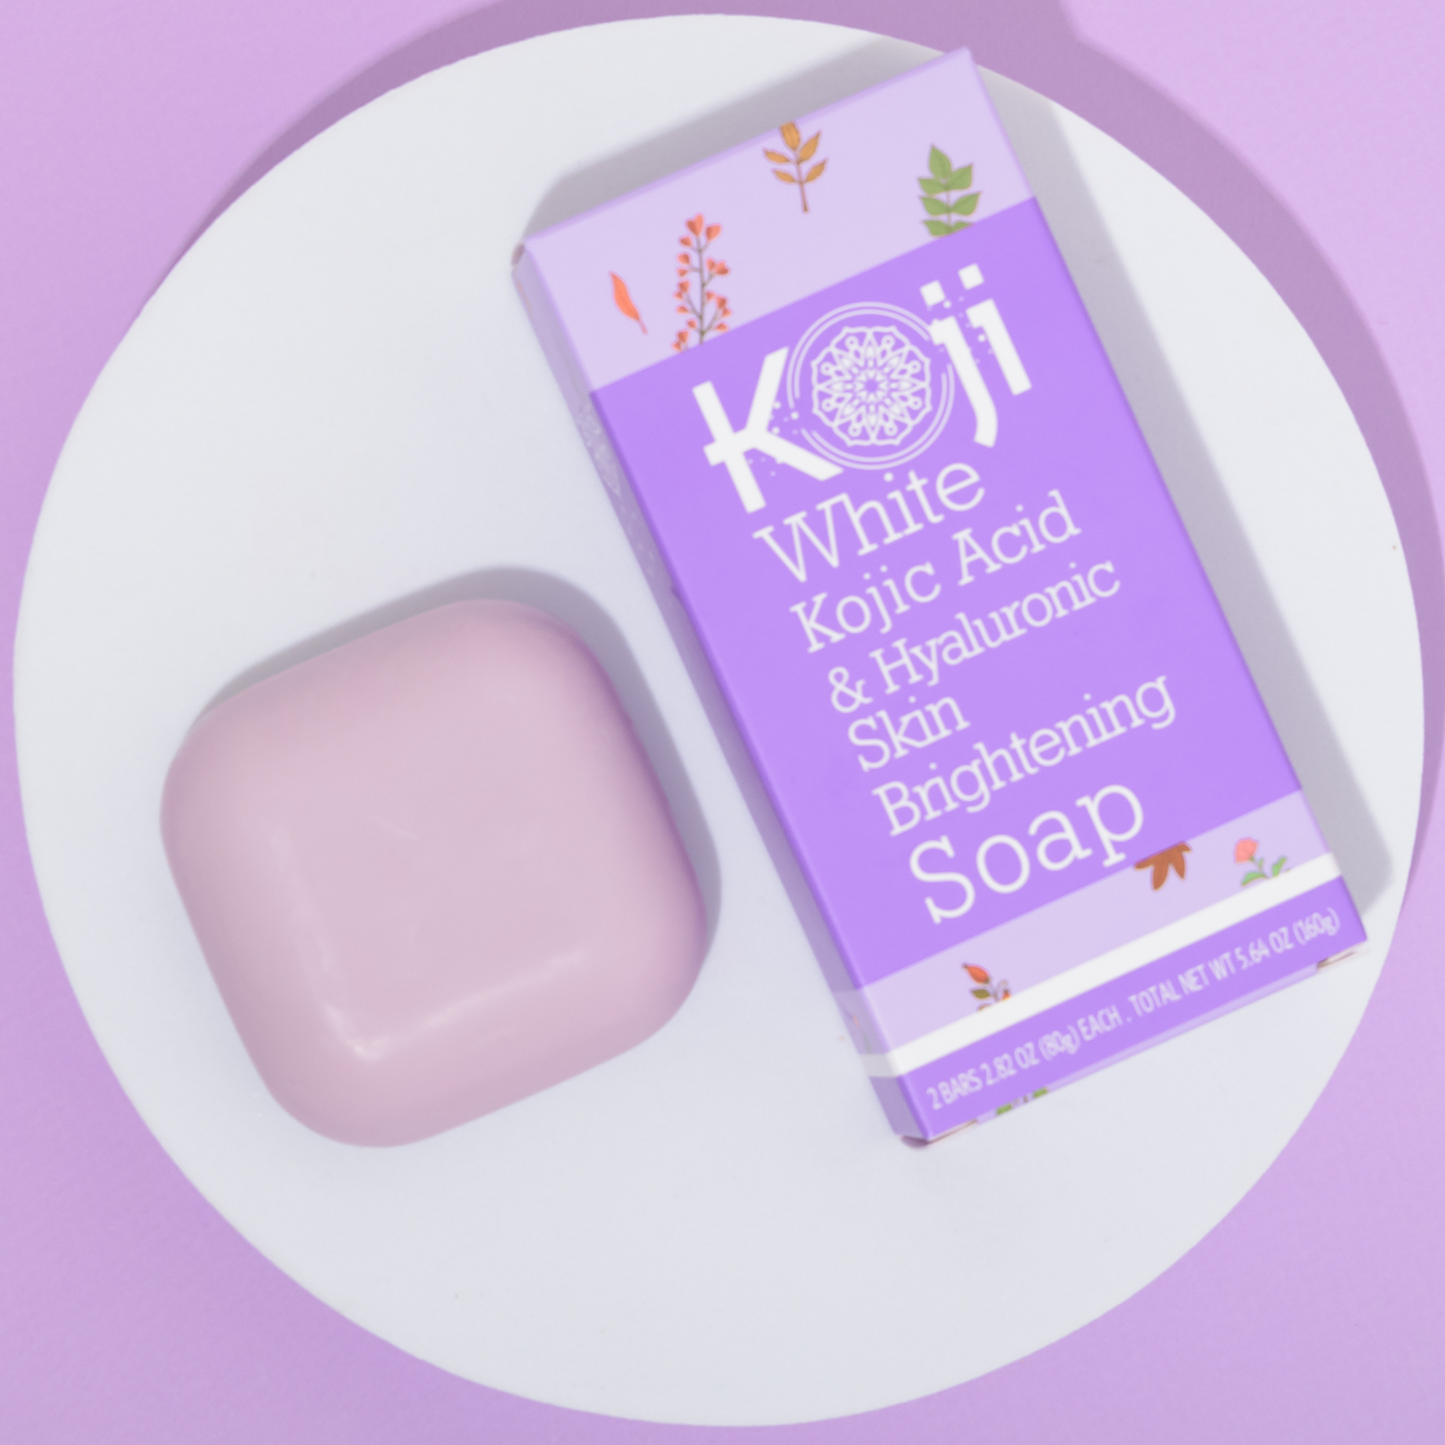 Koji White Kojic Acid & Hyaluronic Acid Brightening Soap